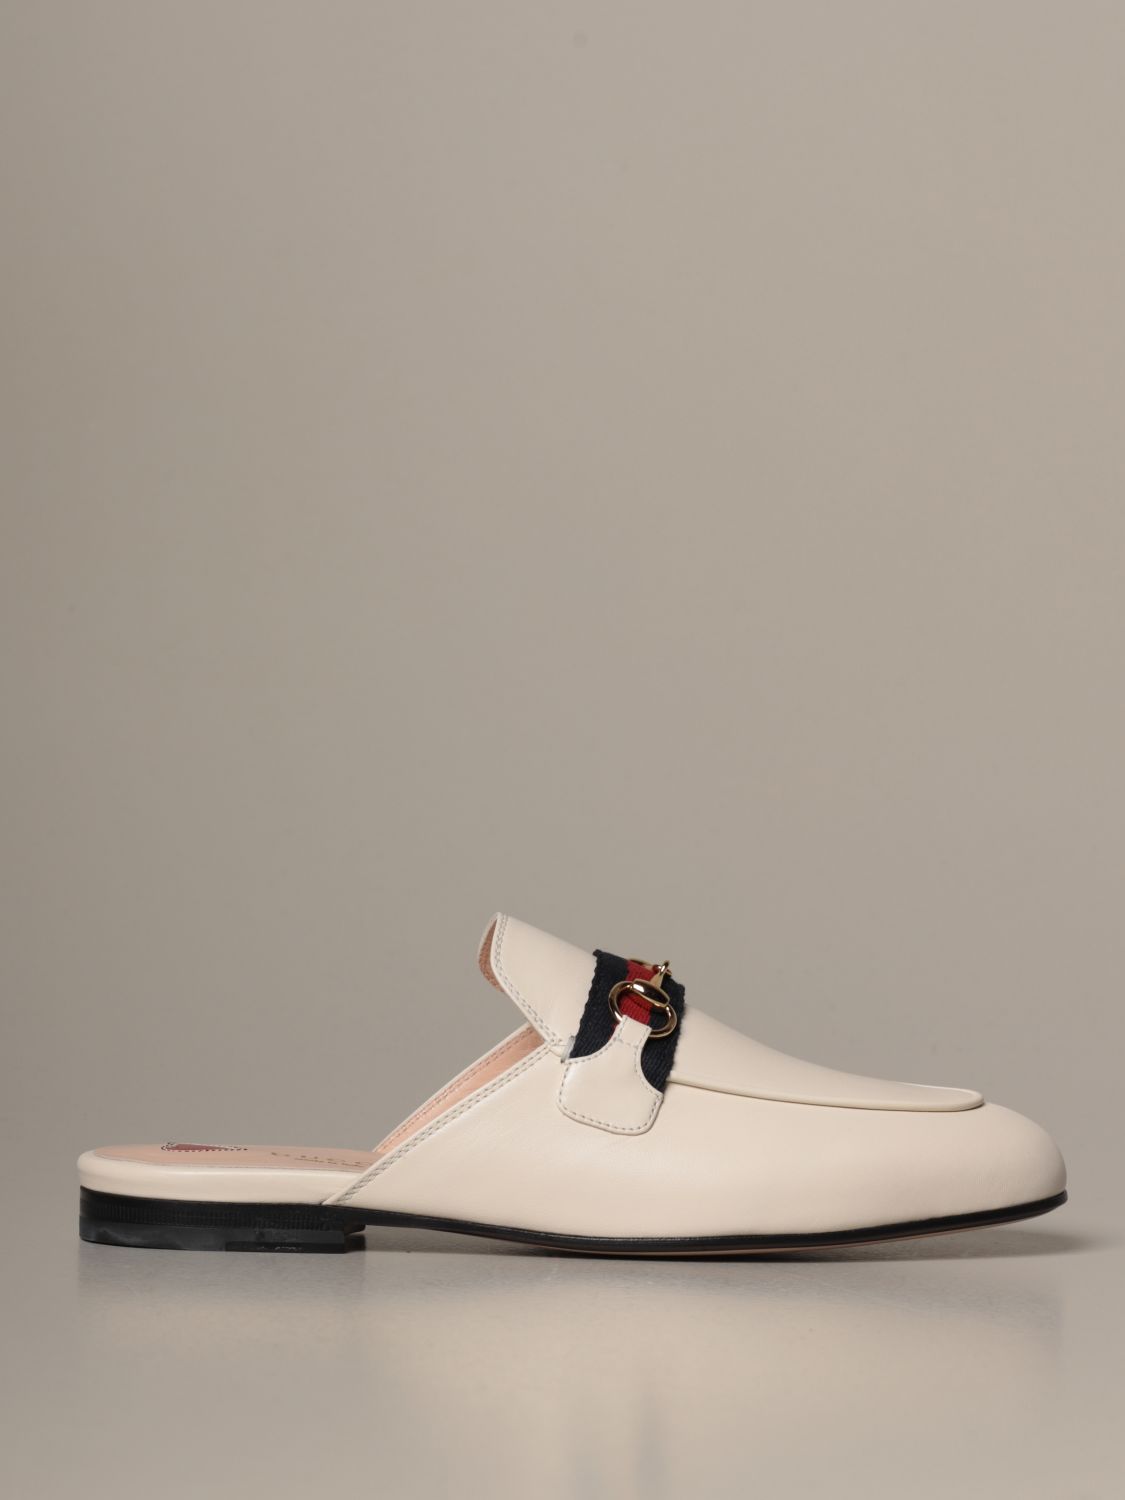 gucci slipper shoes